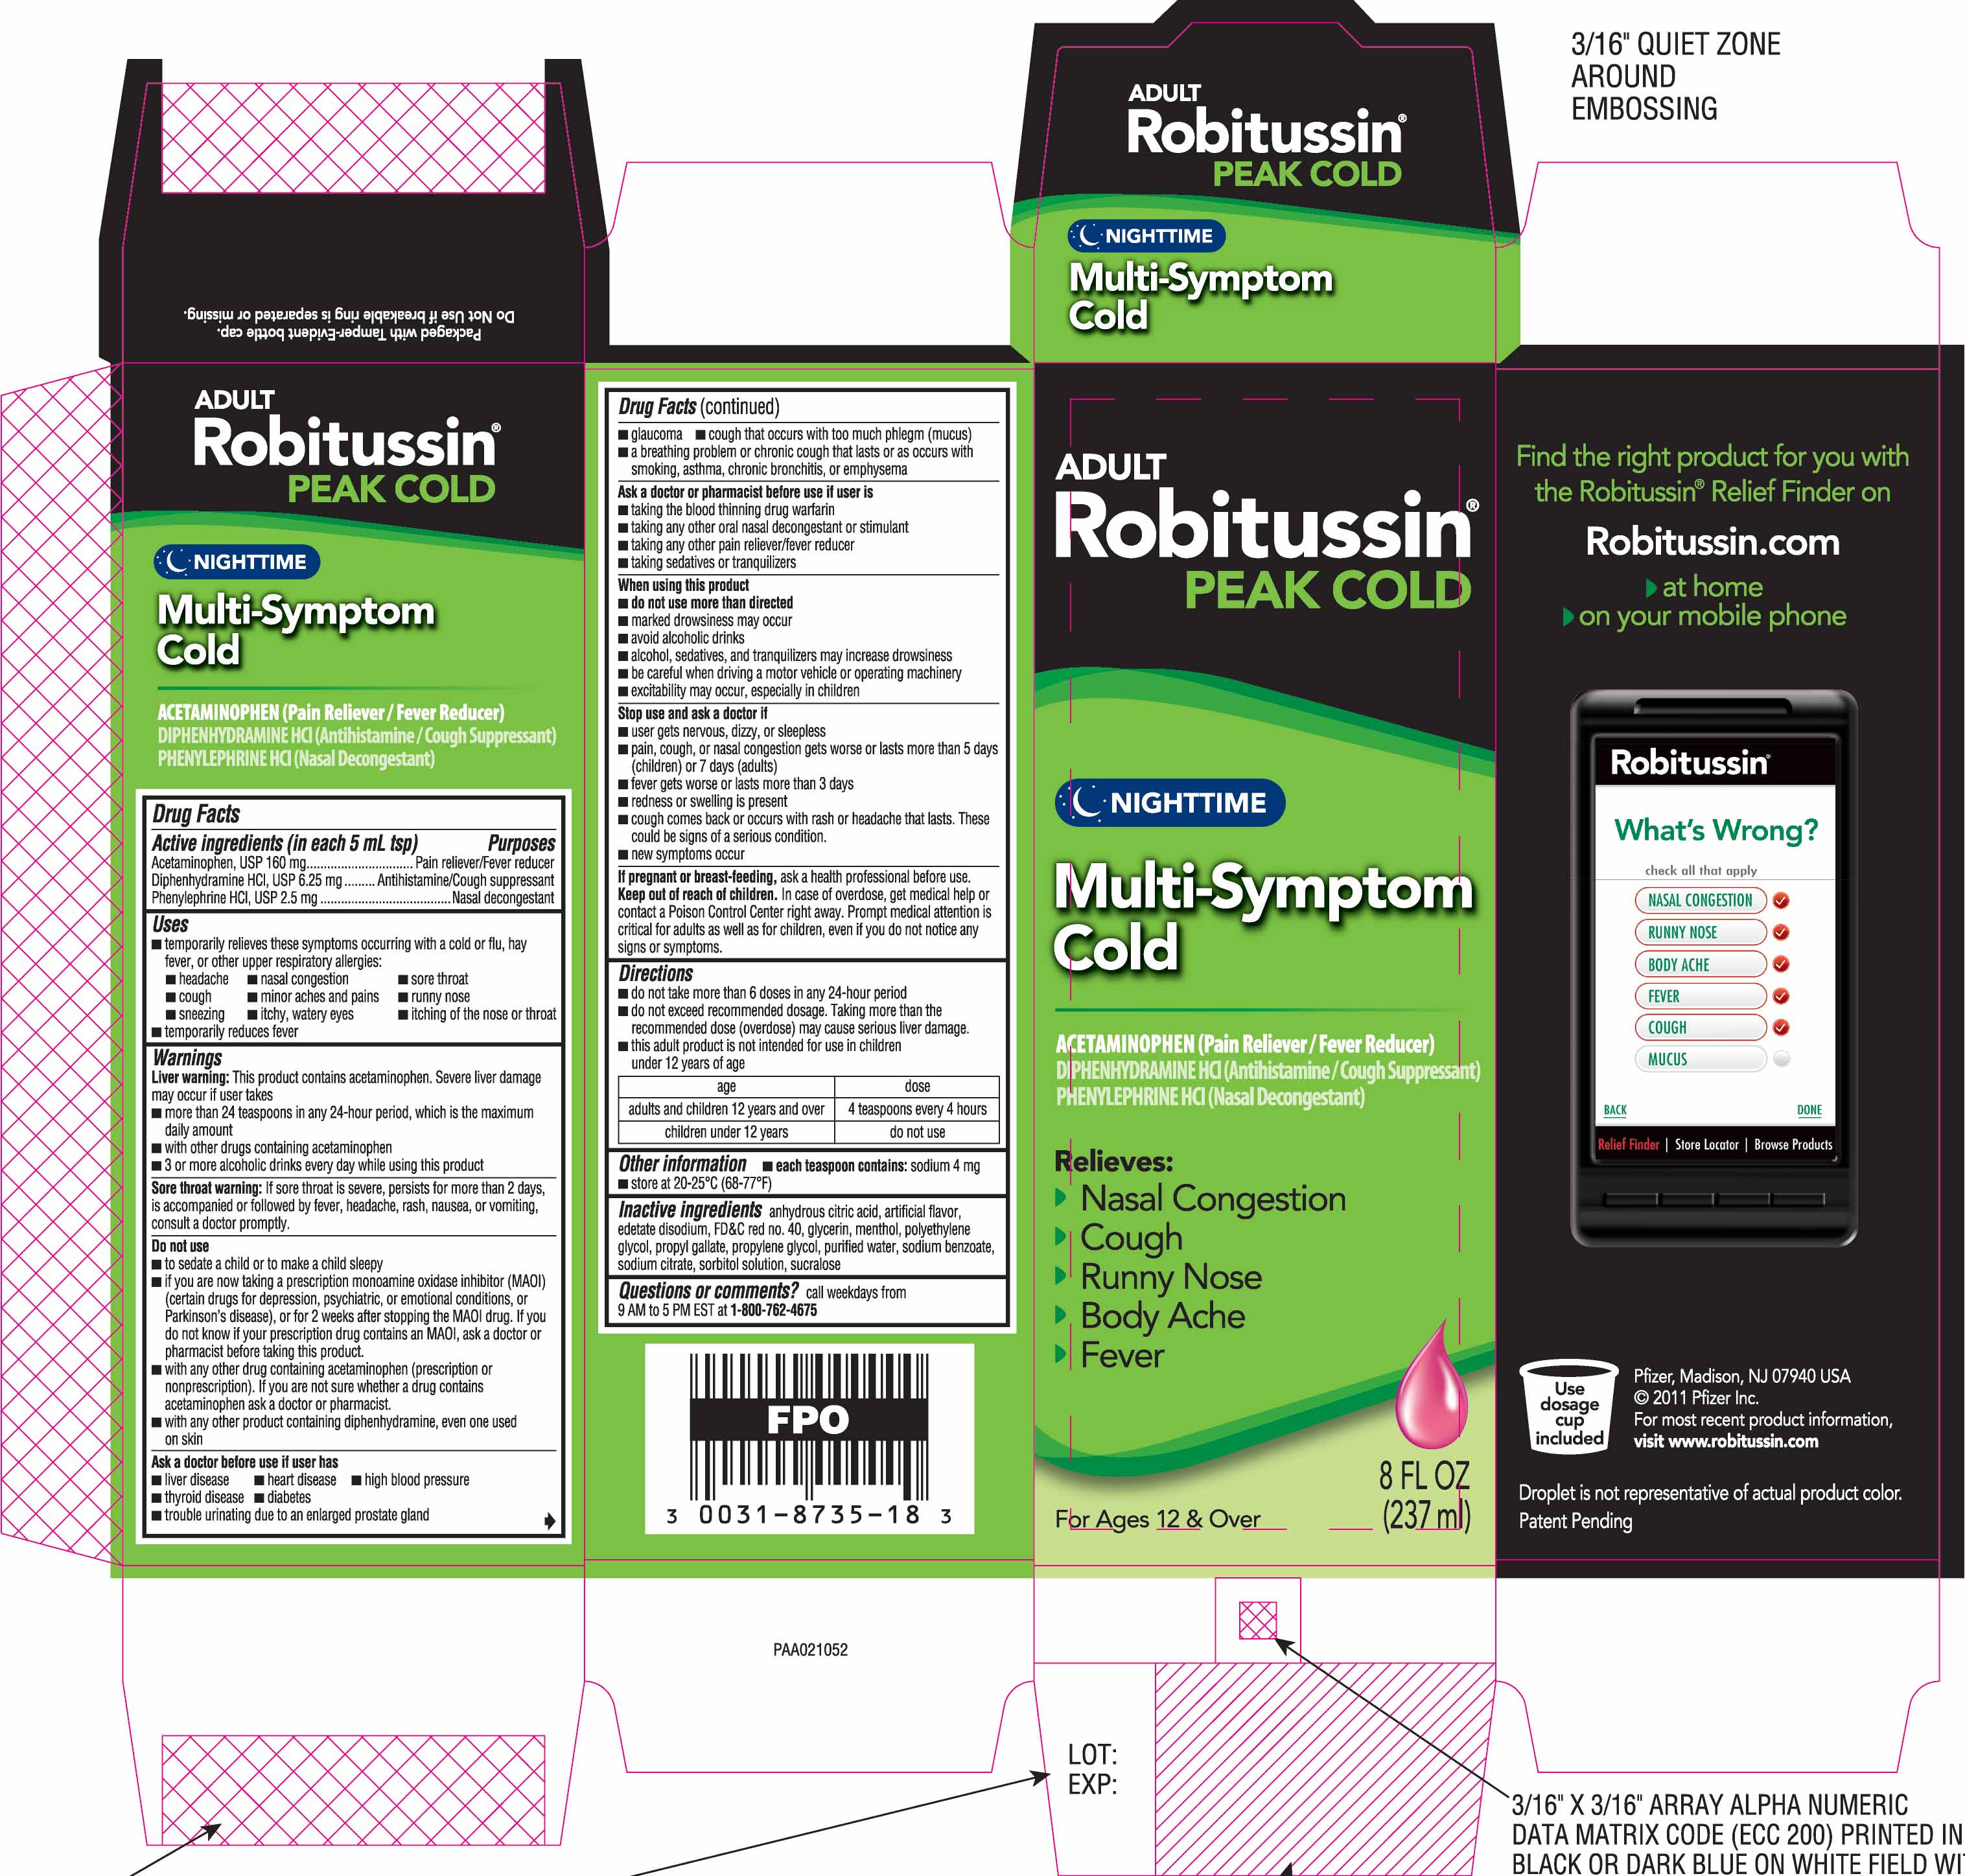 Robitussin Peak Cold Nighttime Multi-Symptom Cold Packaging